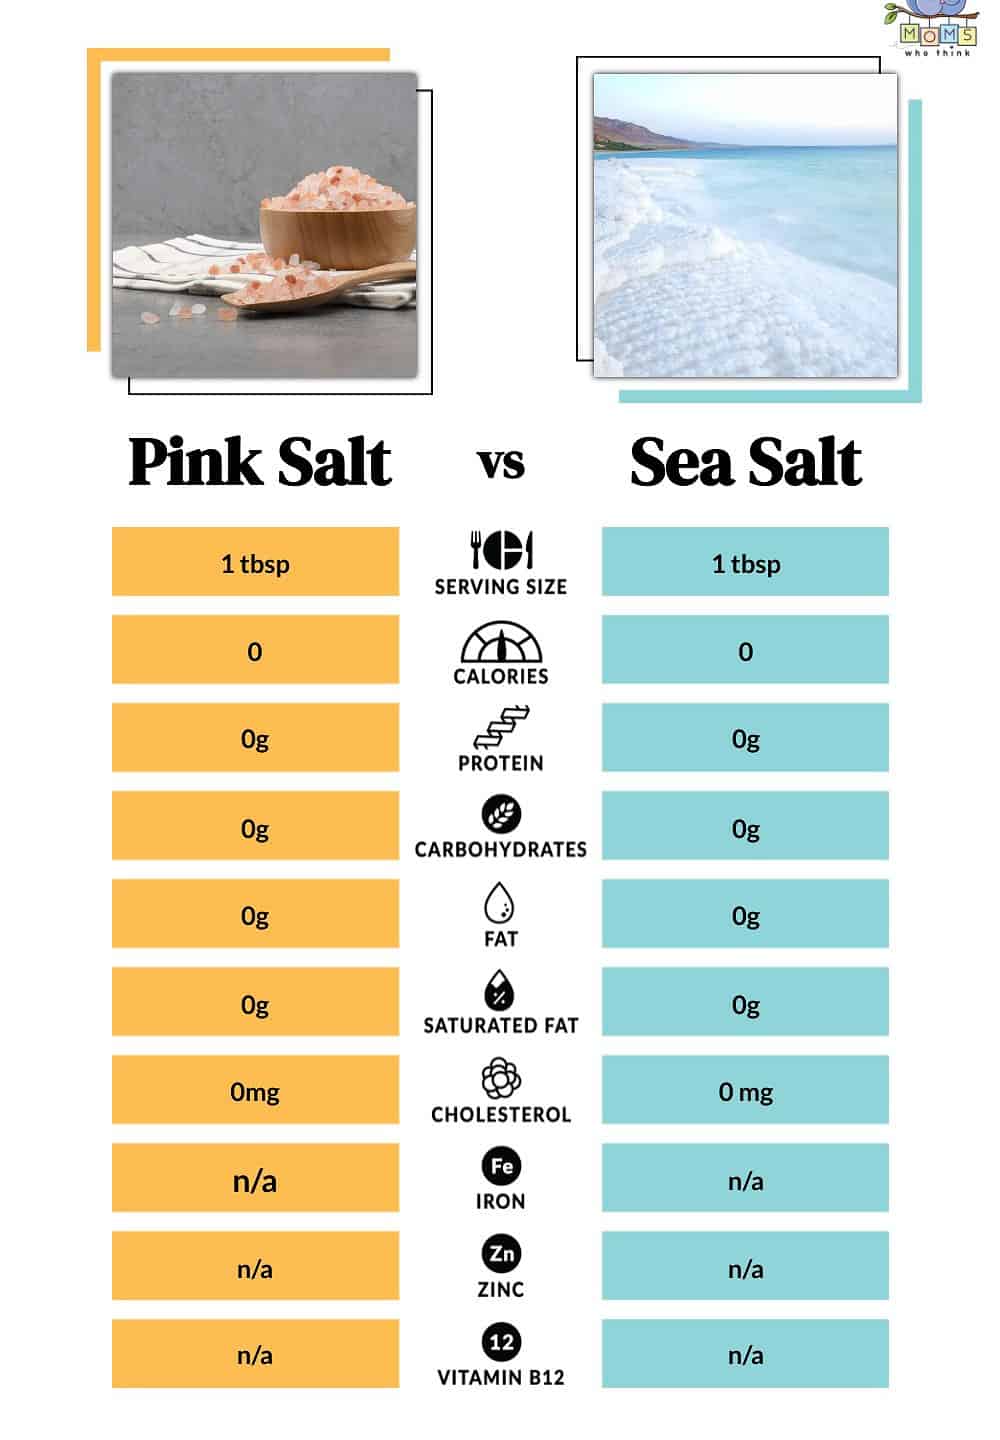 Pink Salt vs Sea Salt Nutritional Facts